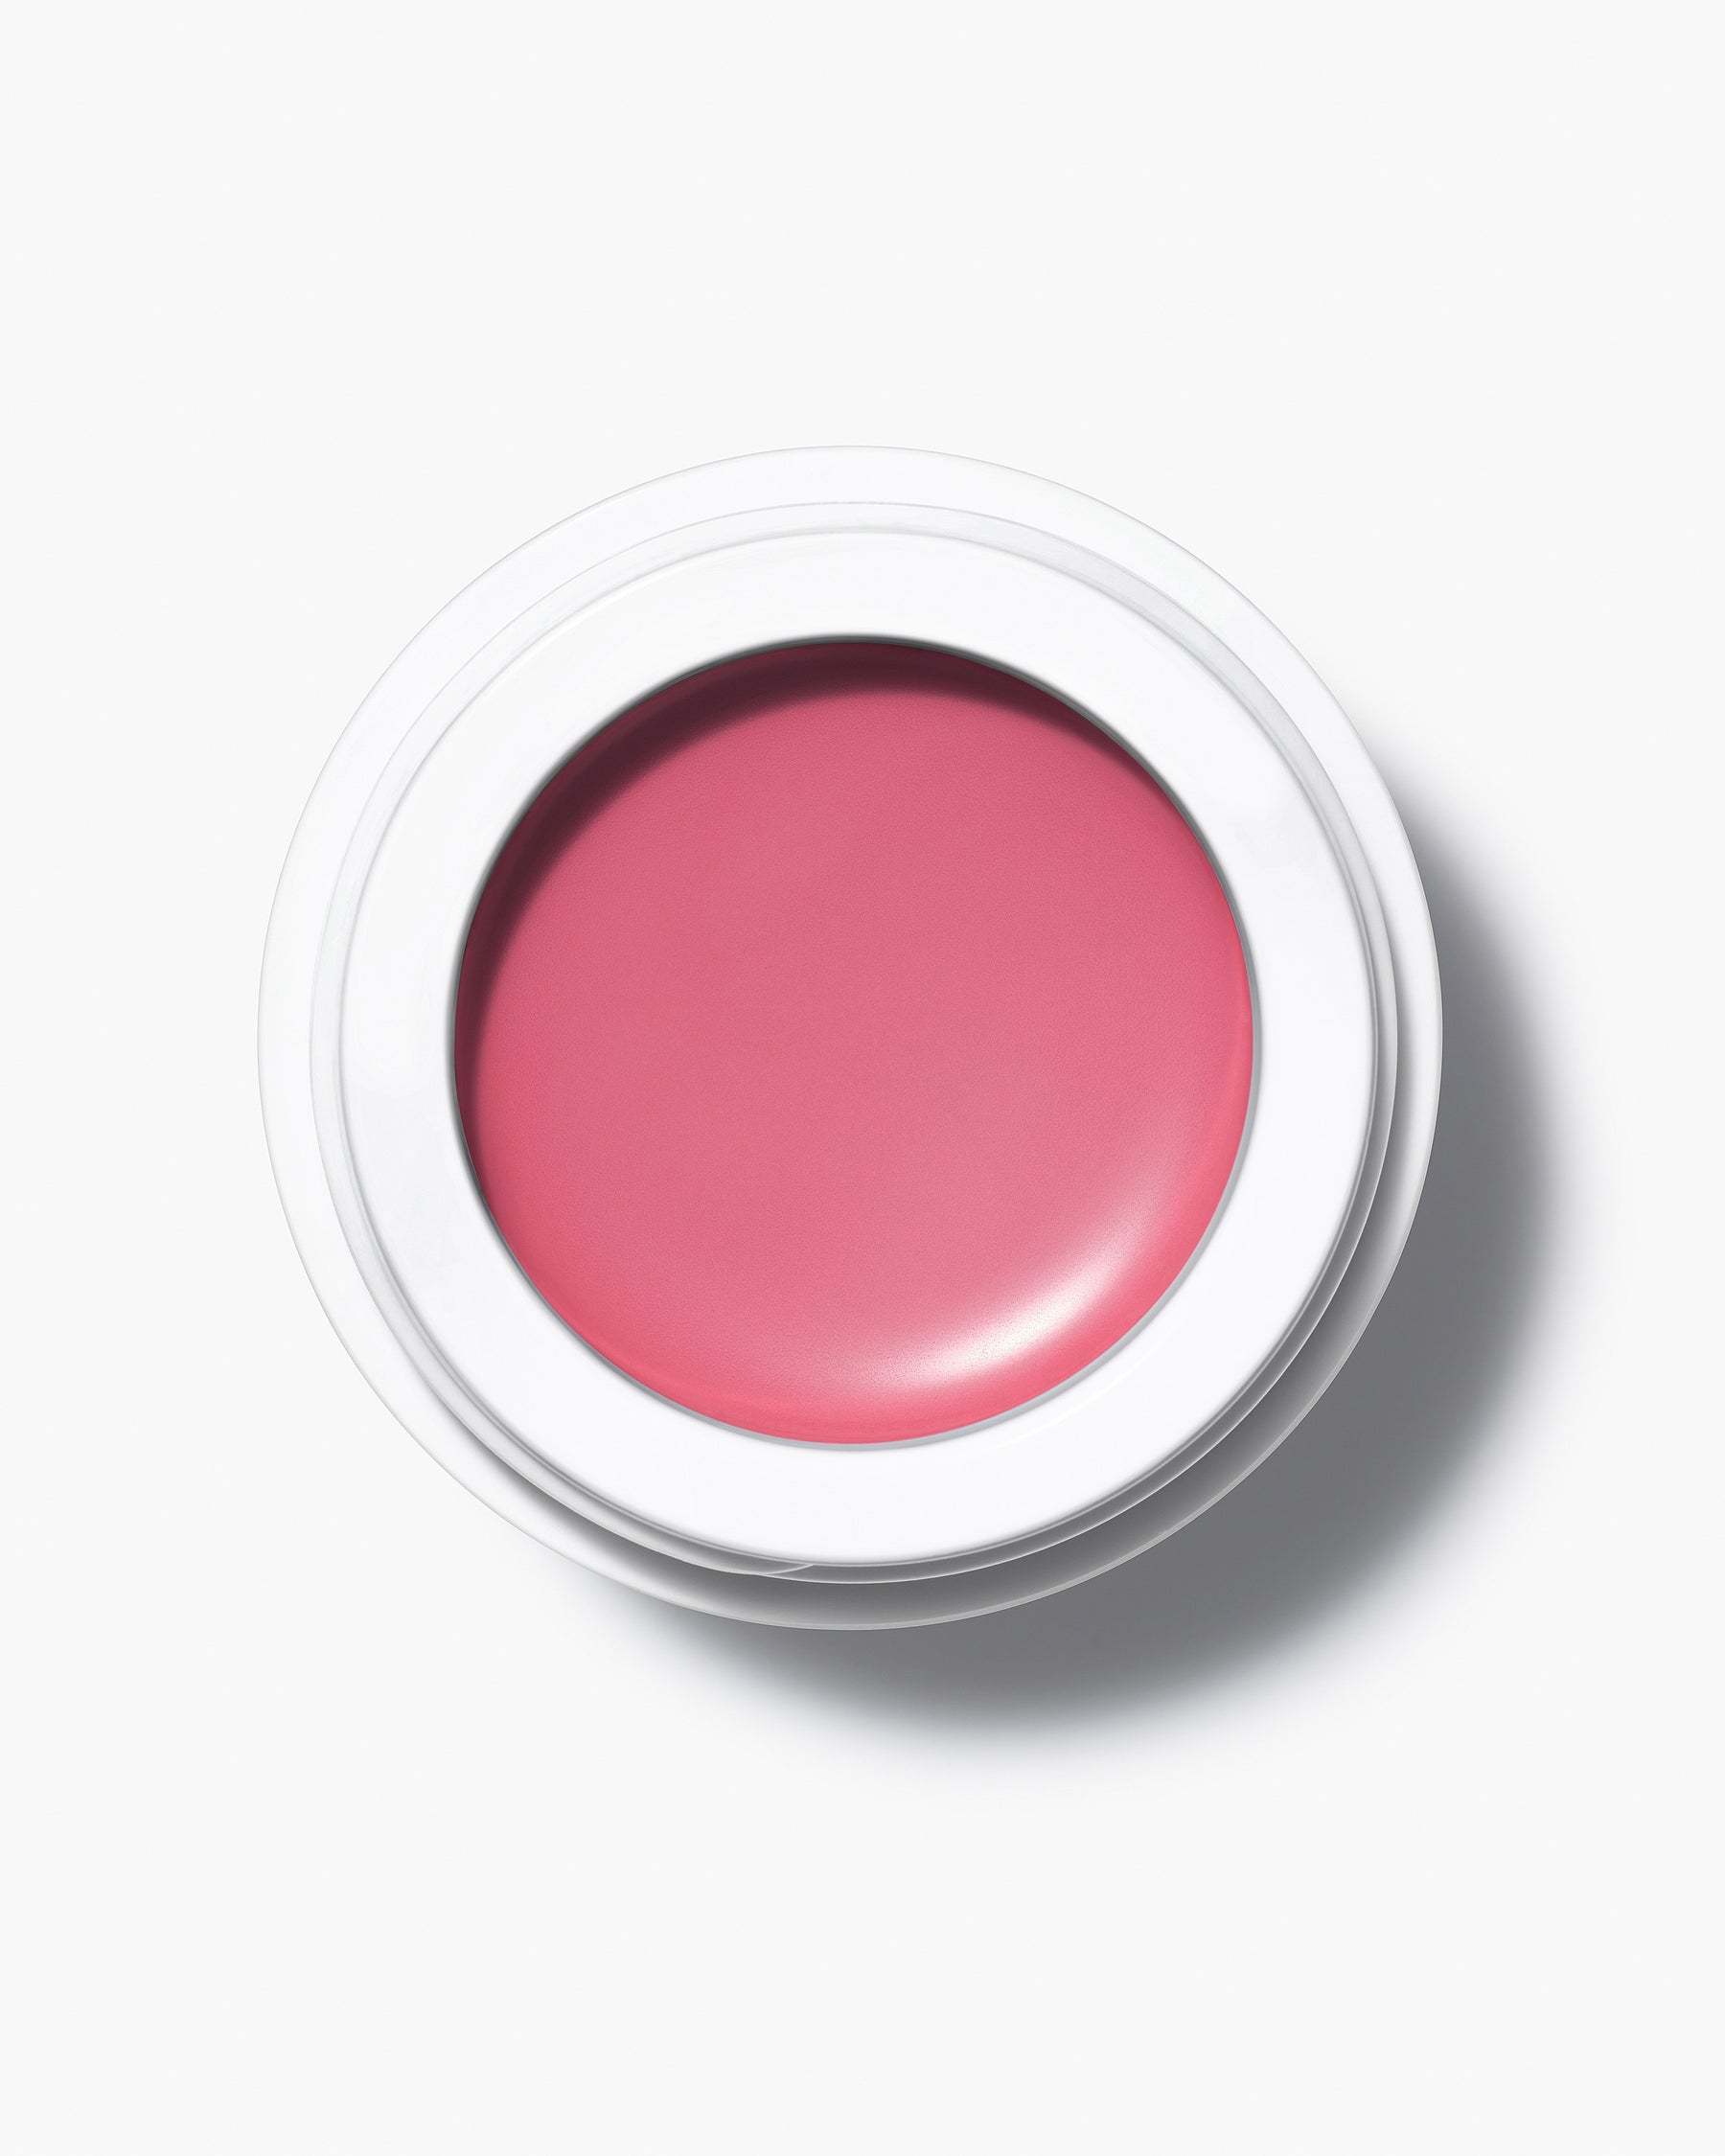 Manasi 7 lipstick, blush, multi-use All Over Colour - Dianthus sunja link - canada